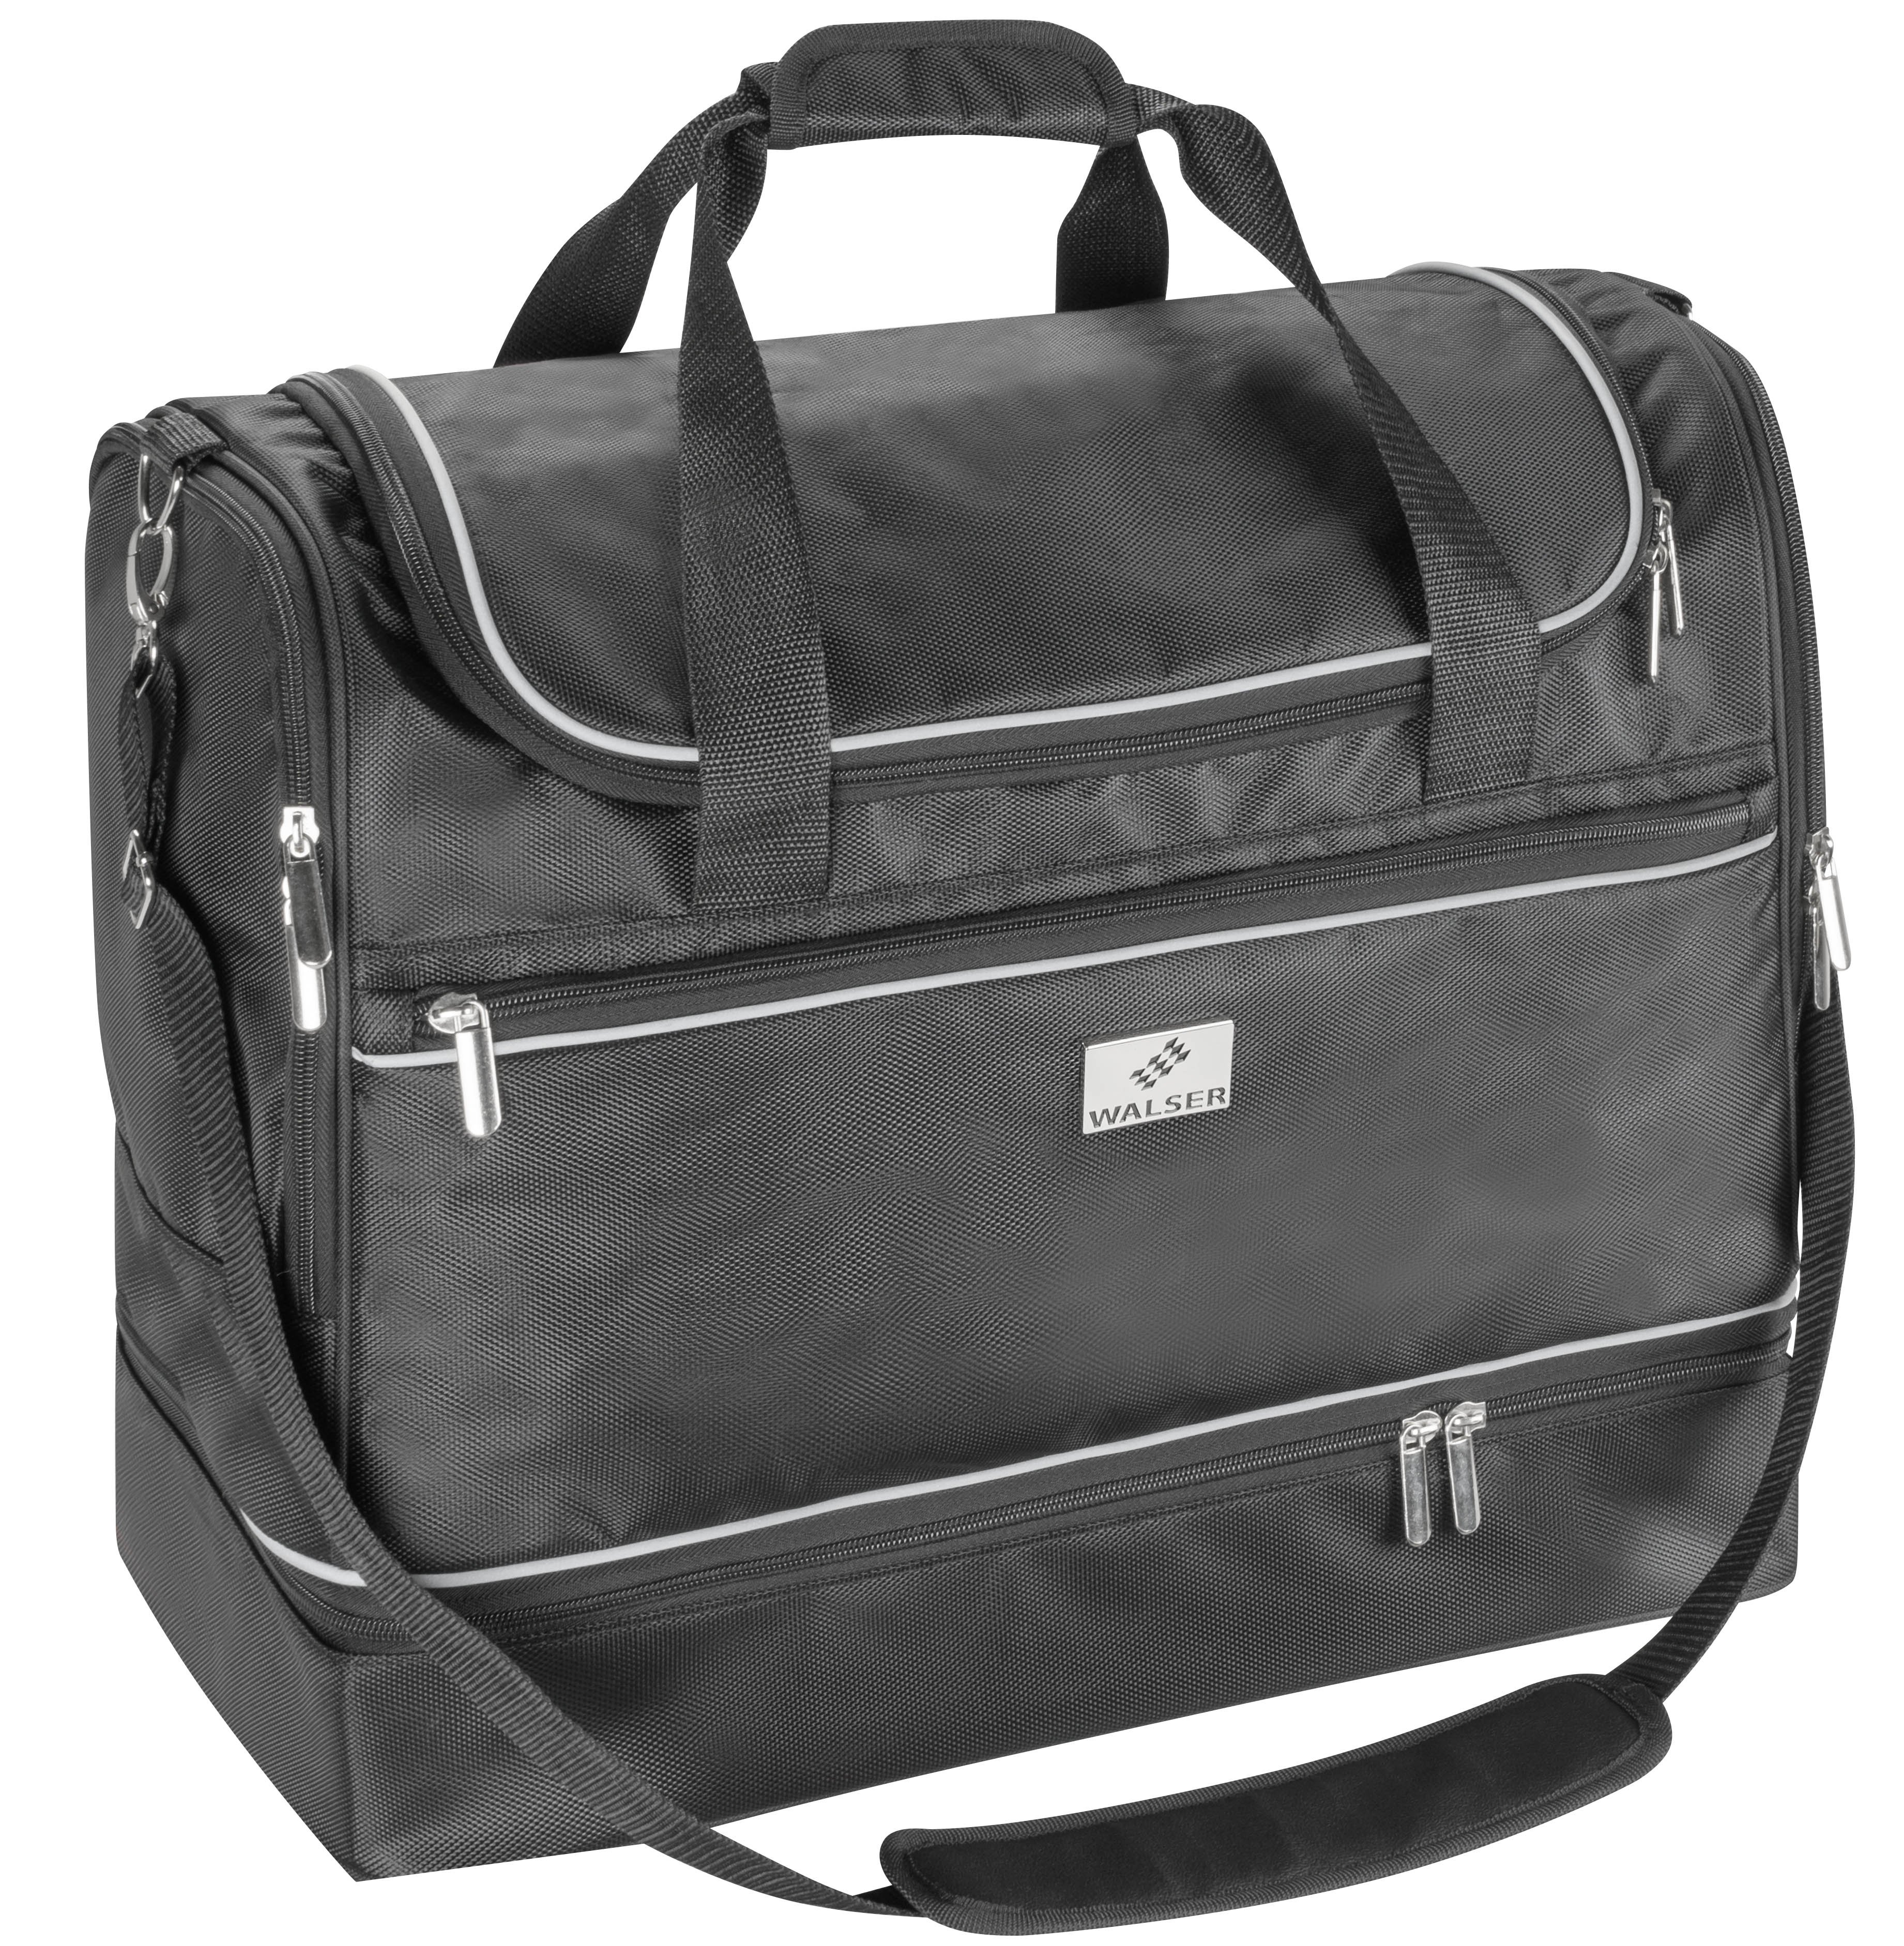 Carbags sports bag 50L - 35x30x45cm